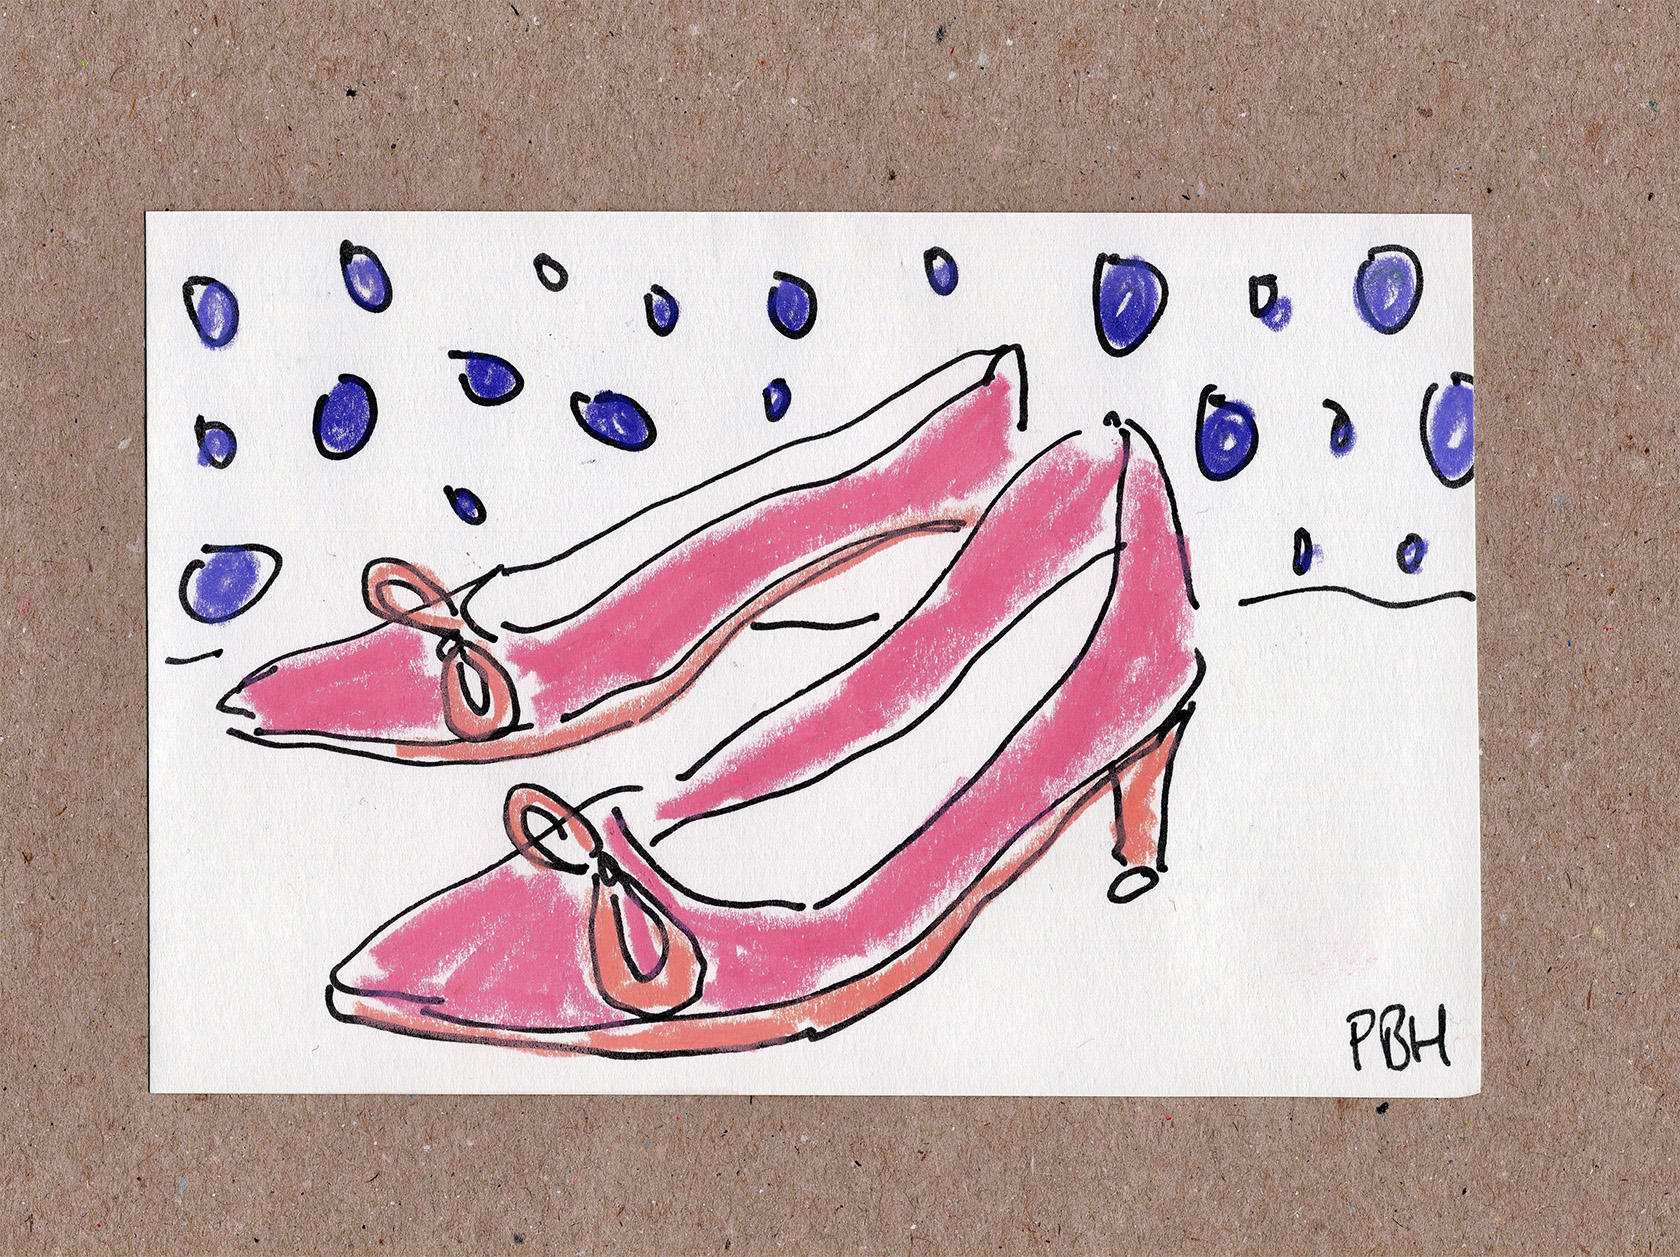 Poppy BH, Spotty shoe study (2)